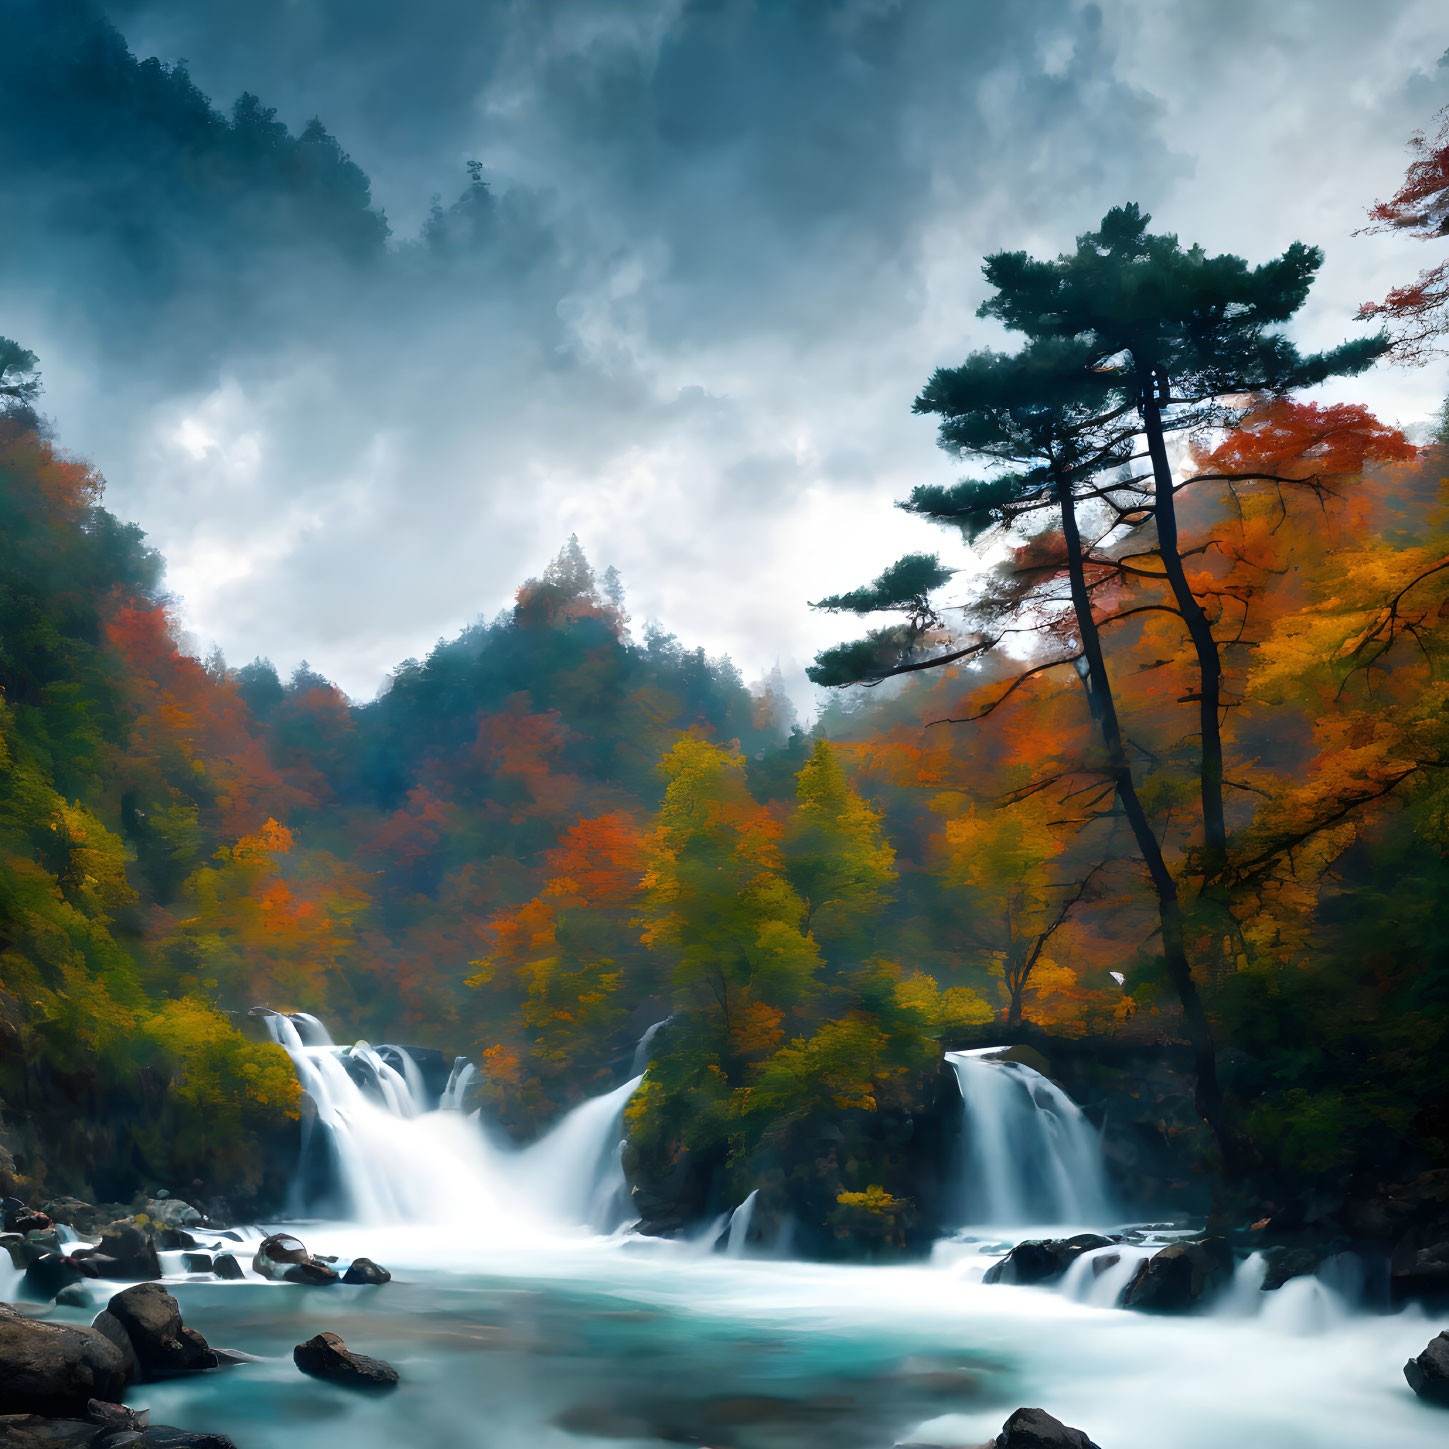 Autumn foliage surrounds serene waterfall under overcast sky